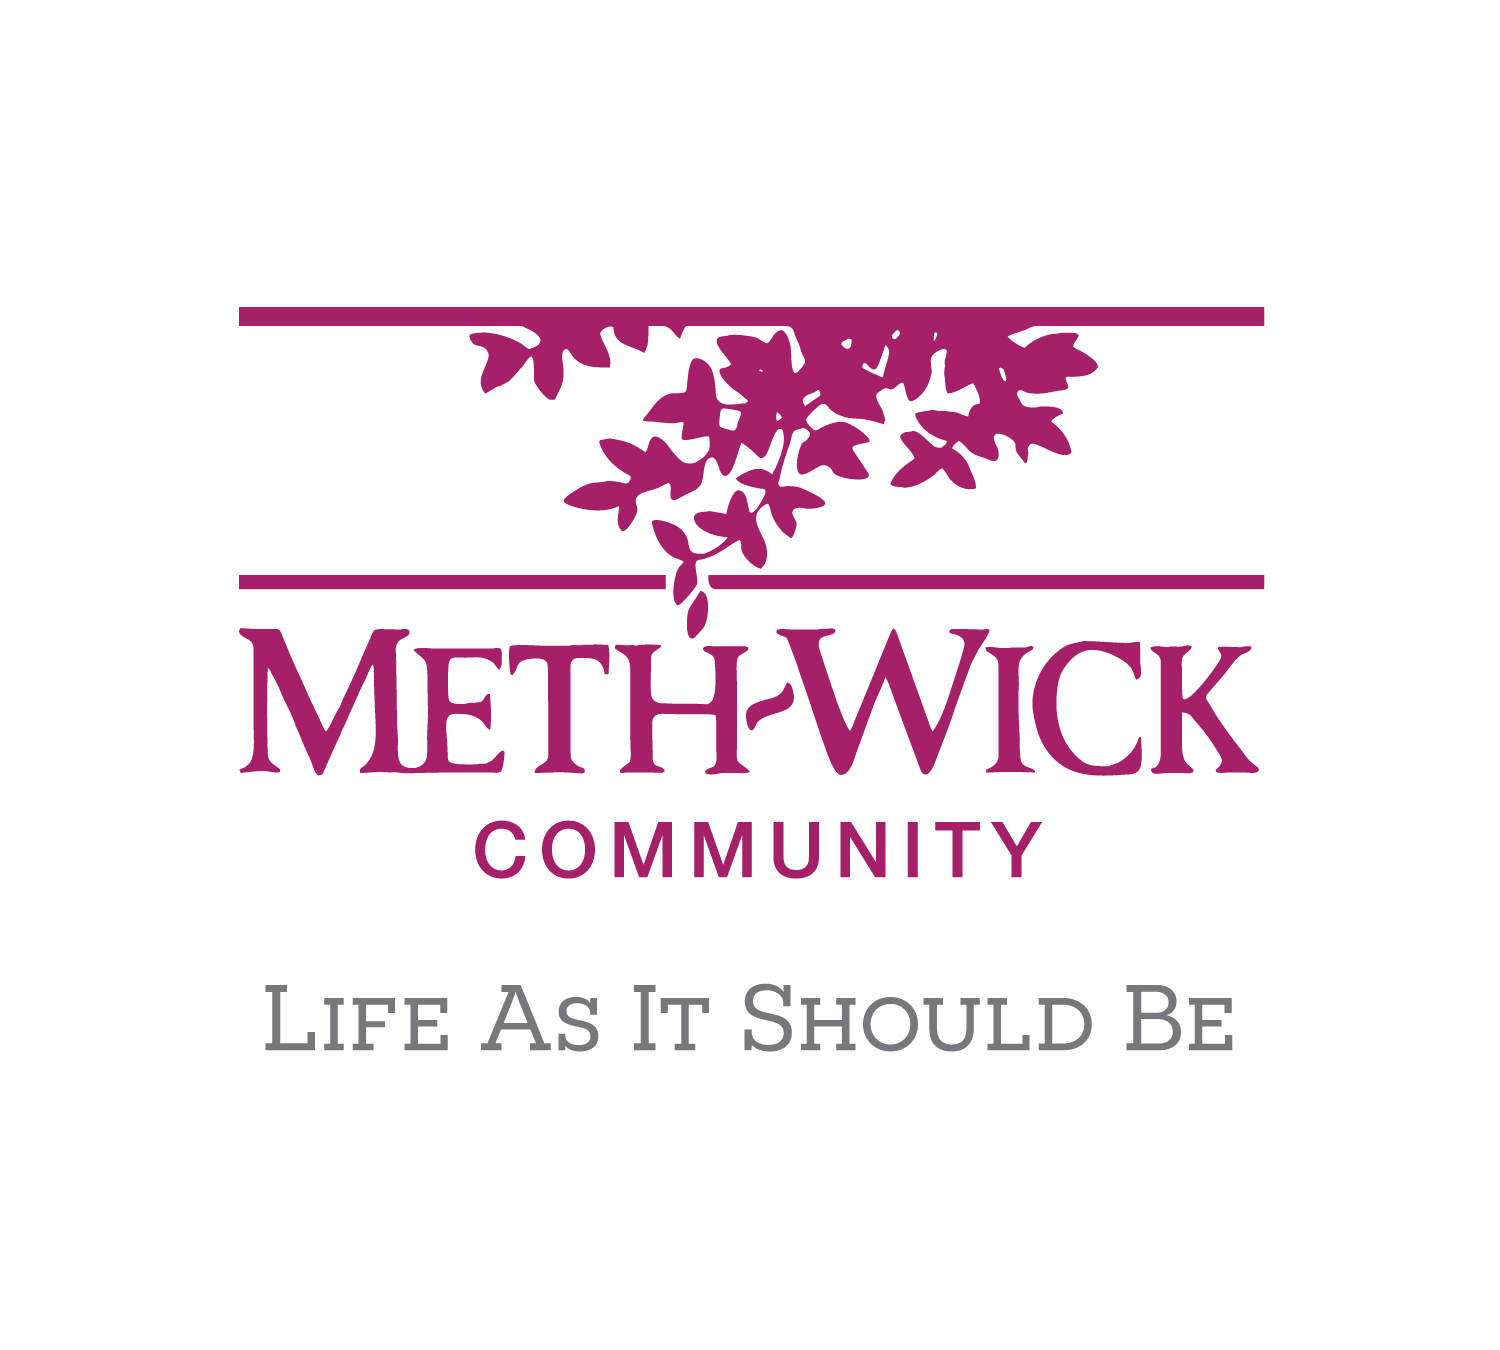 The Meth-Wick Community Inc logo